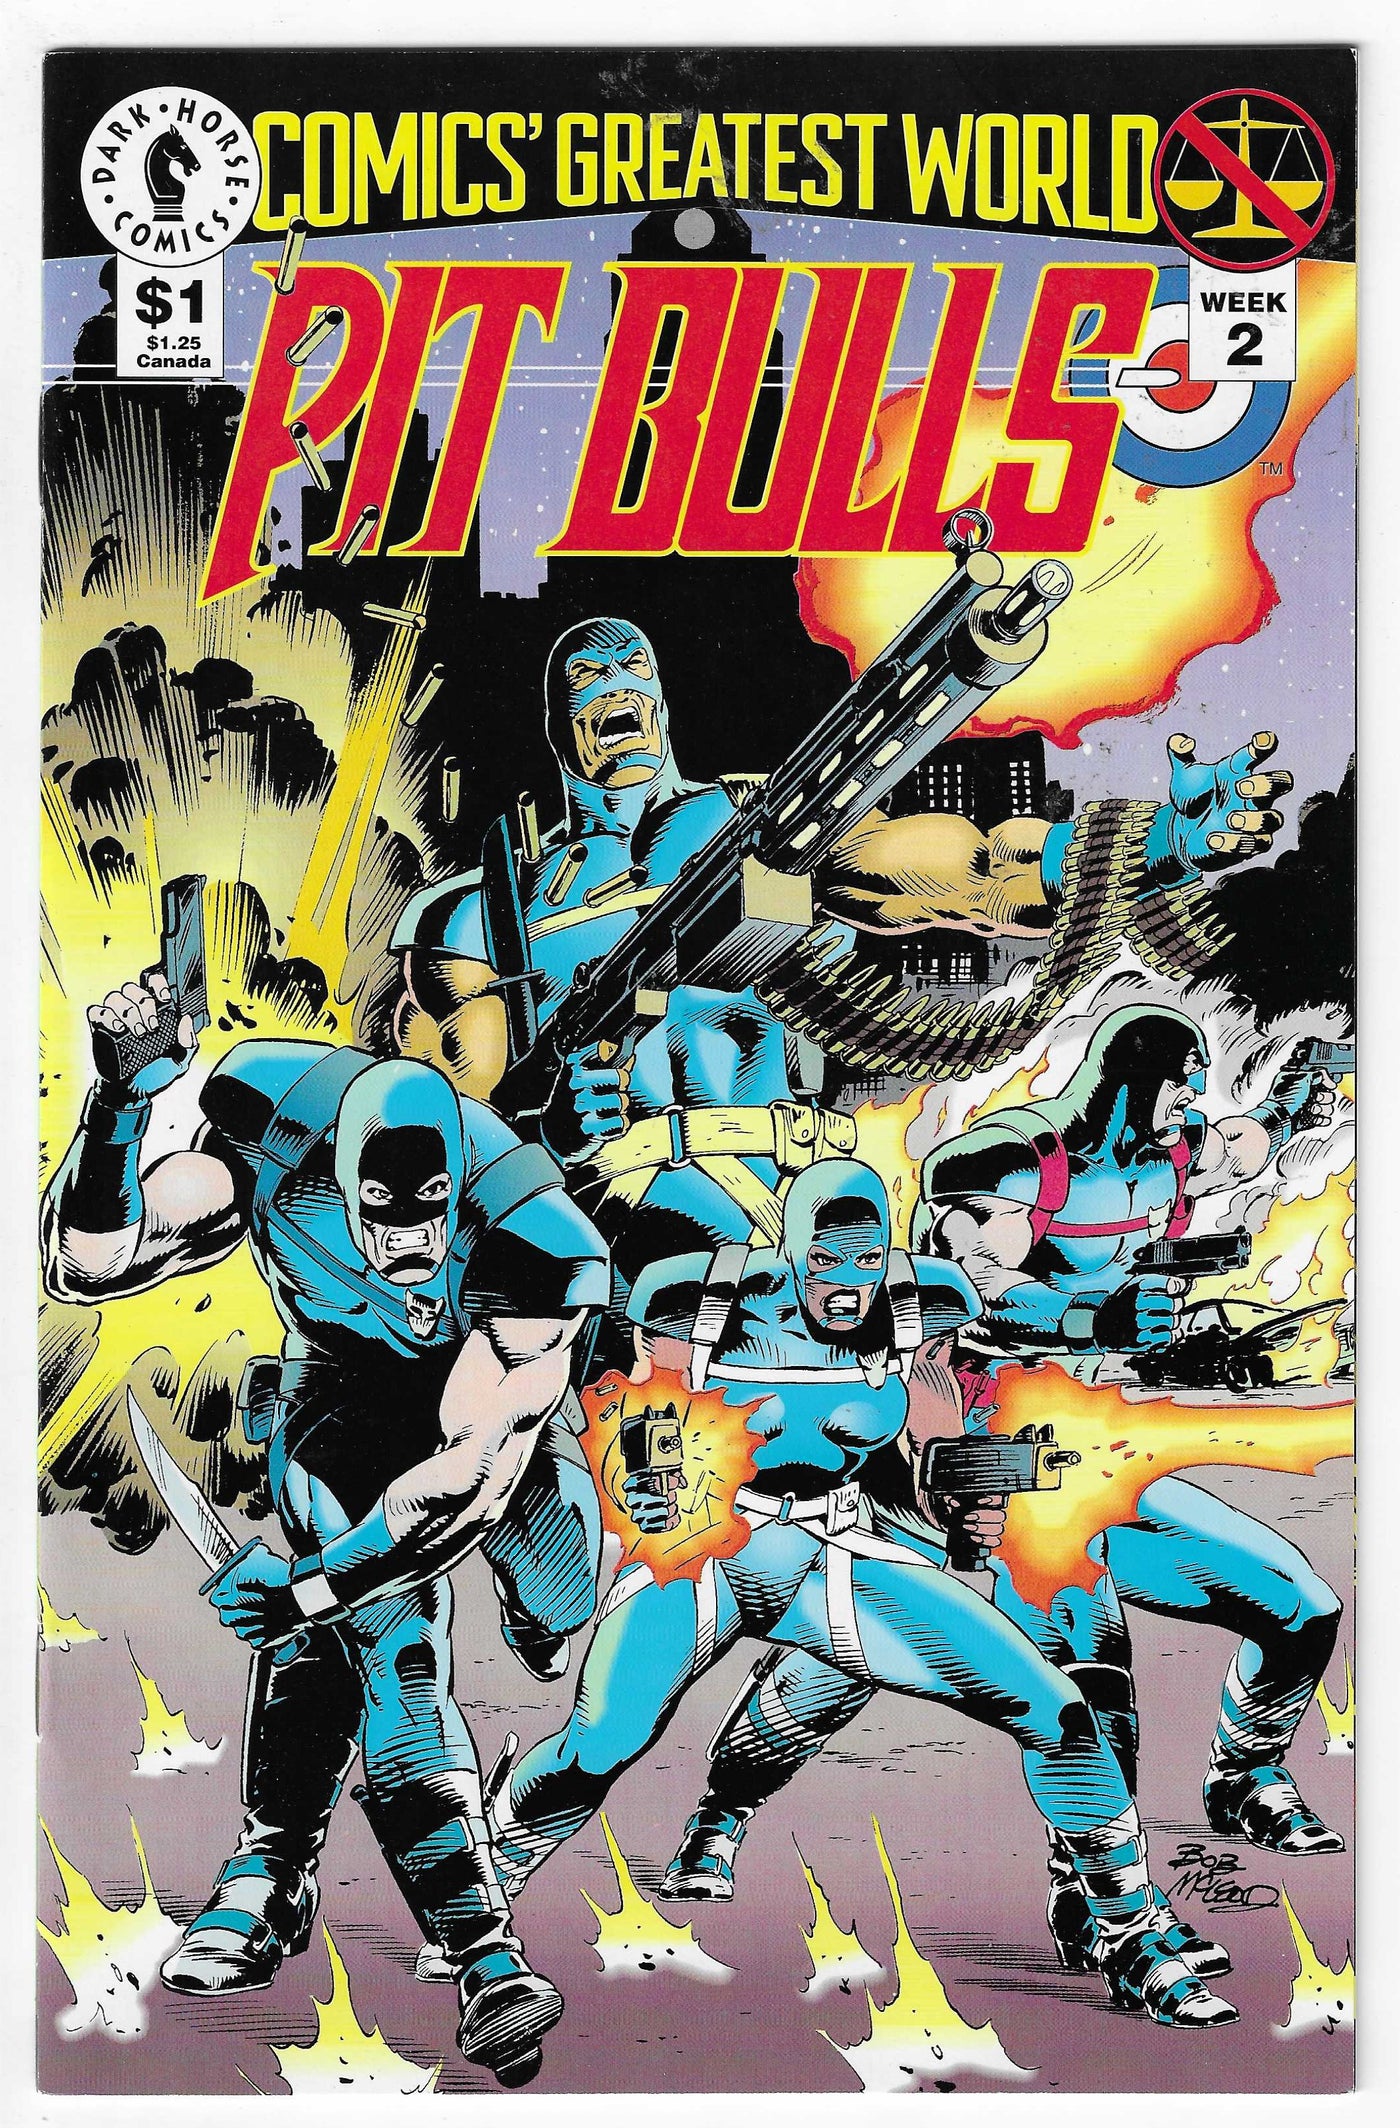 Comics' Greatest World: Pit Bulls (Week 2)